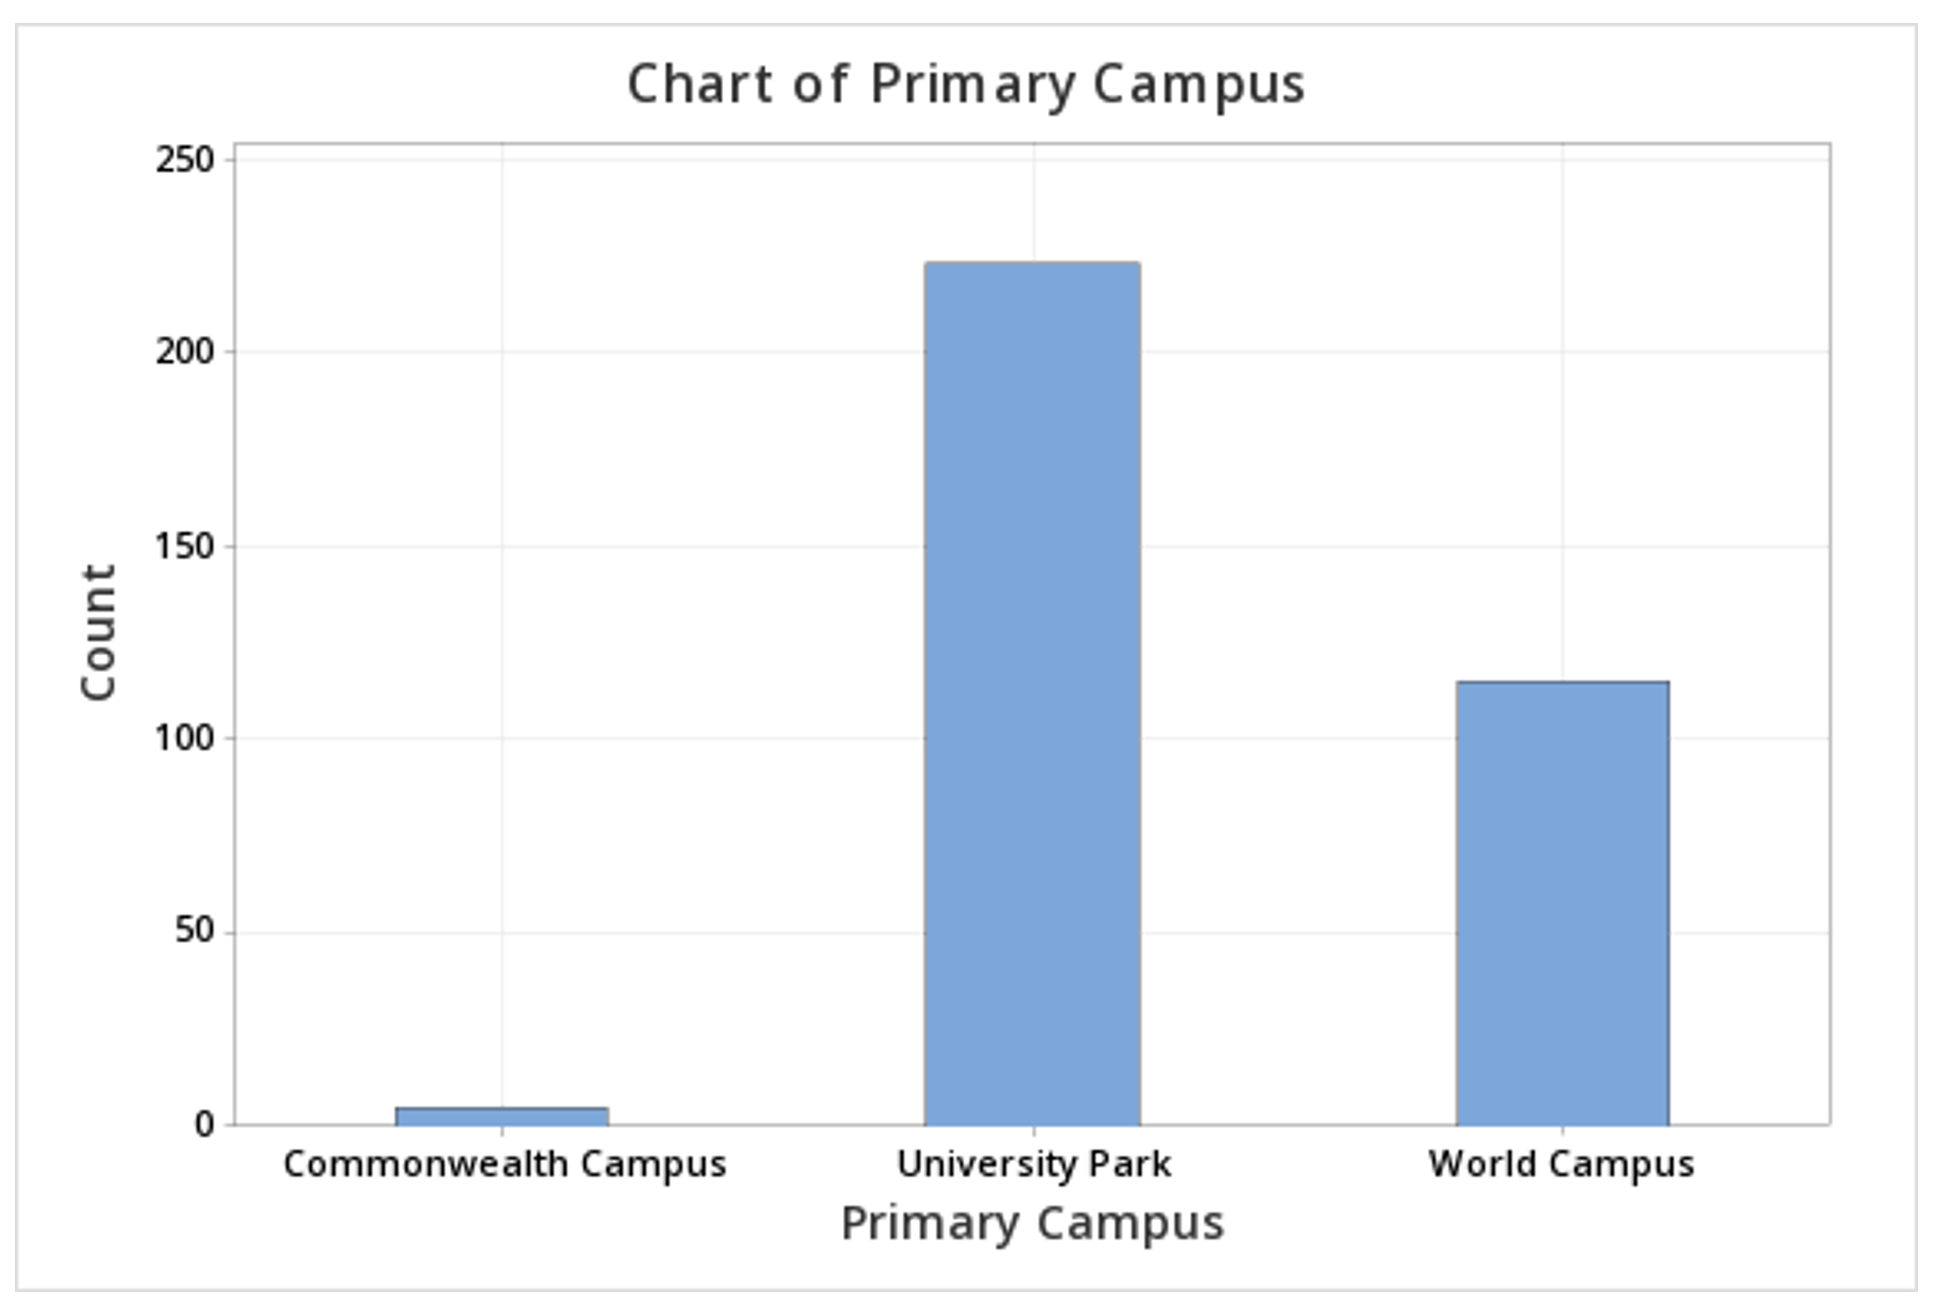 Bar chart of primary campus made using Minitab 